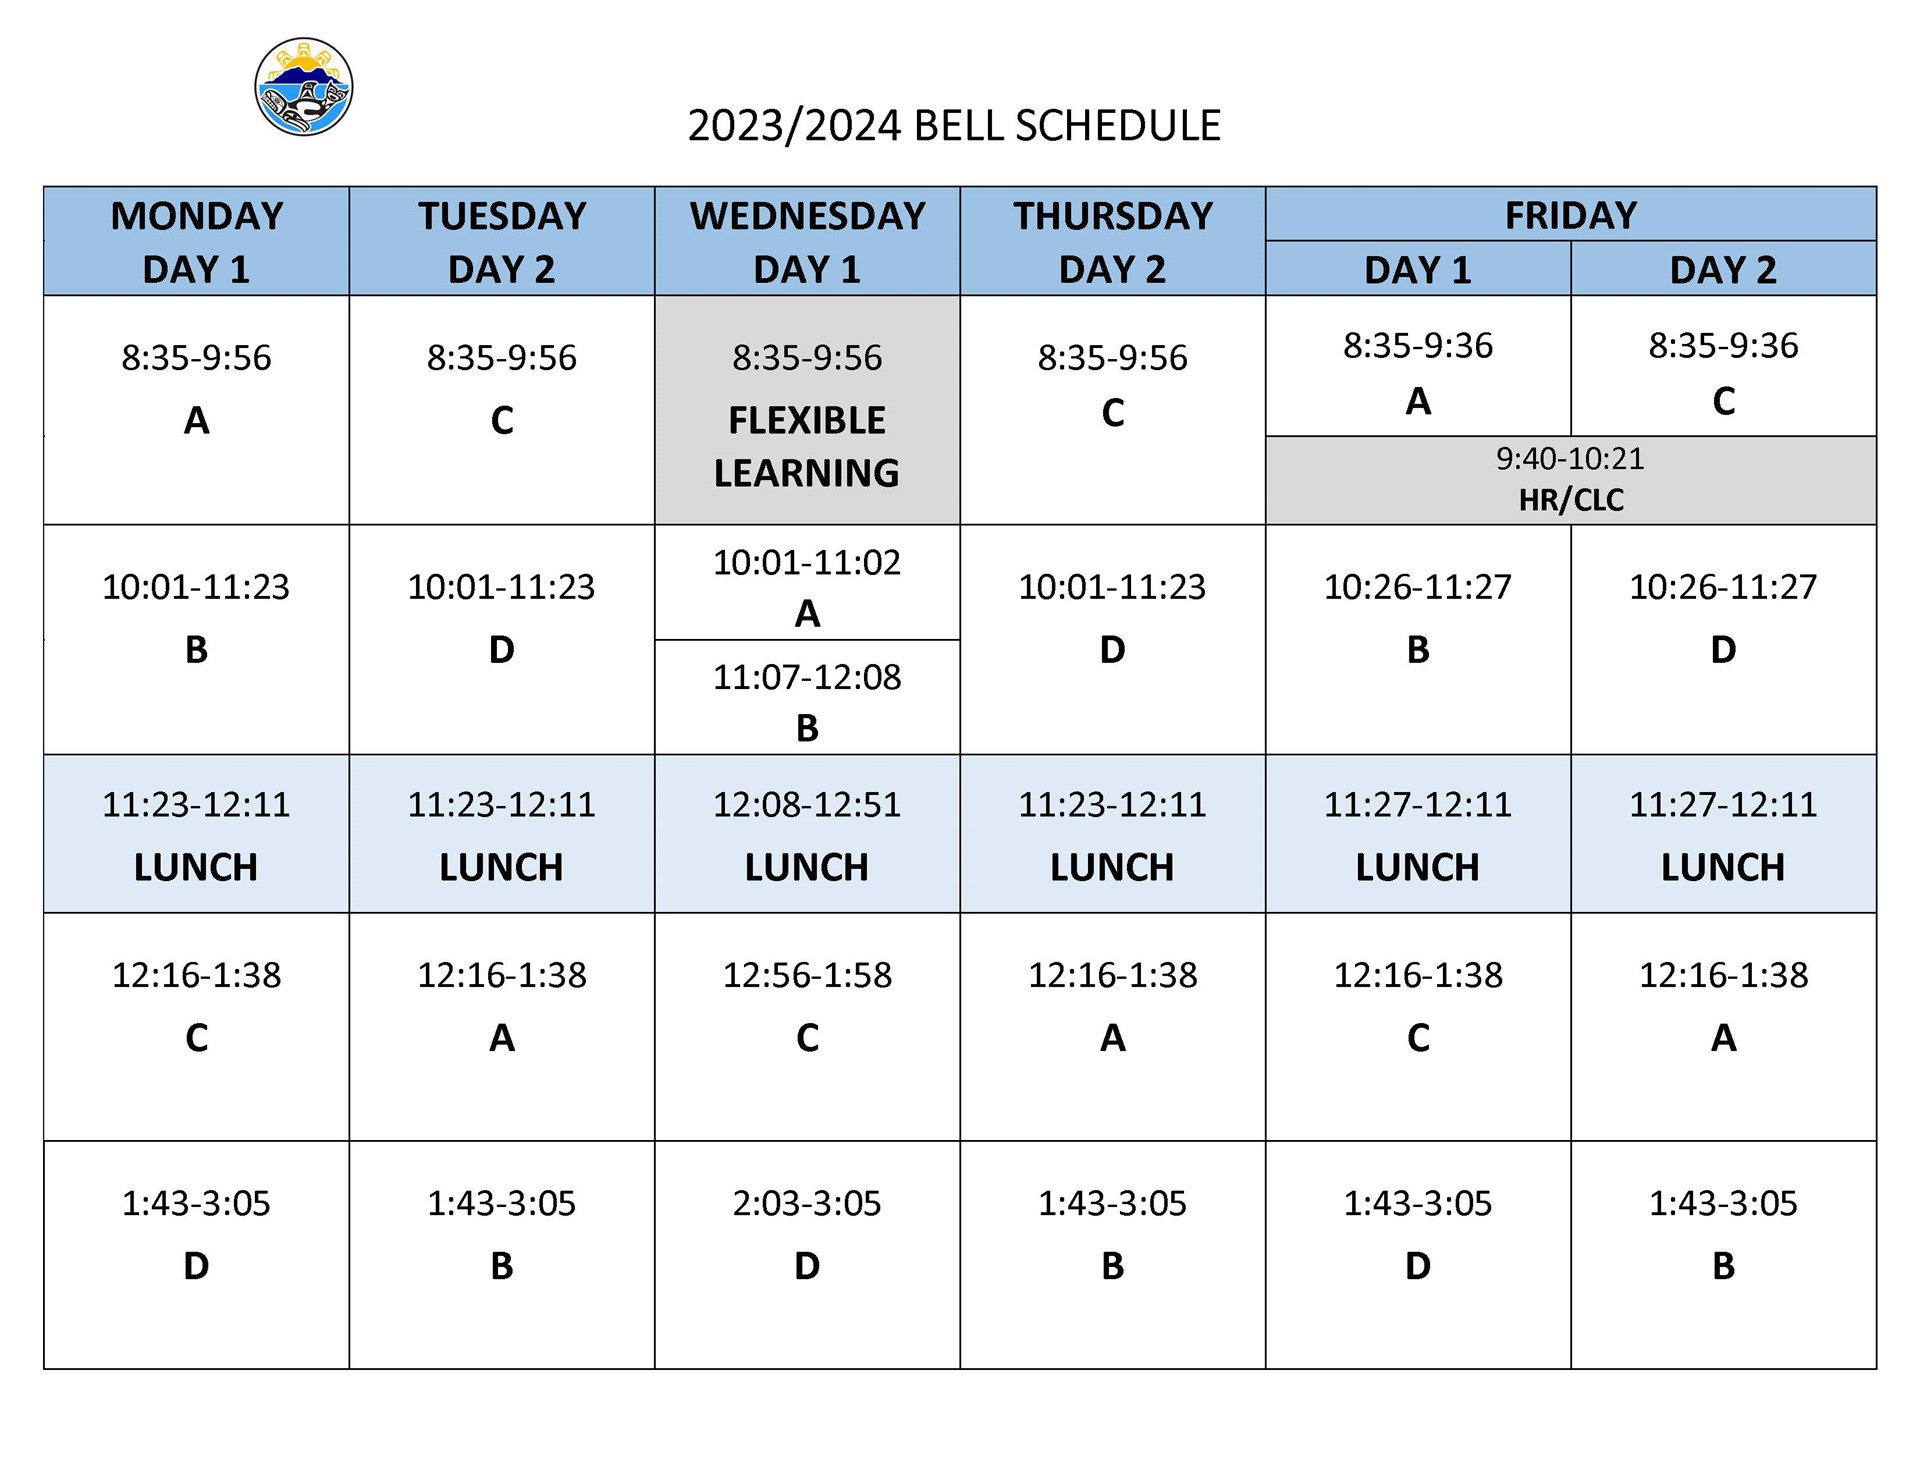 Bell Schedule 2023-2024 June 2023 - Final.jpg